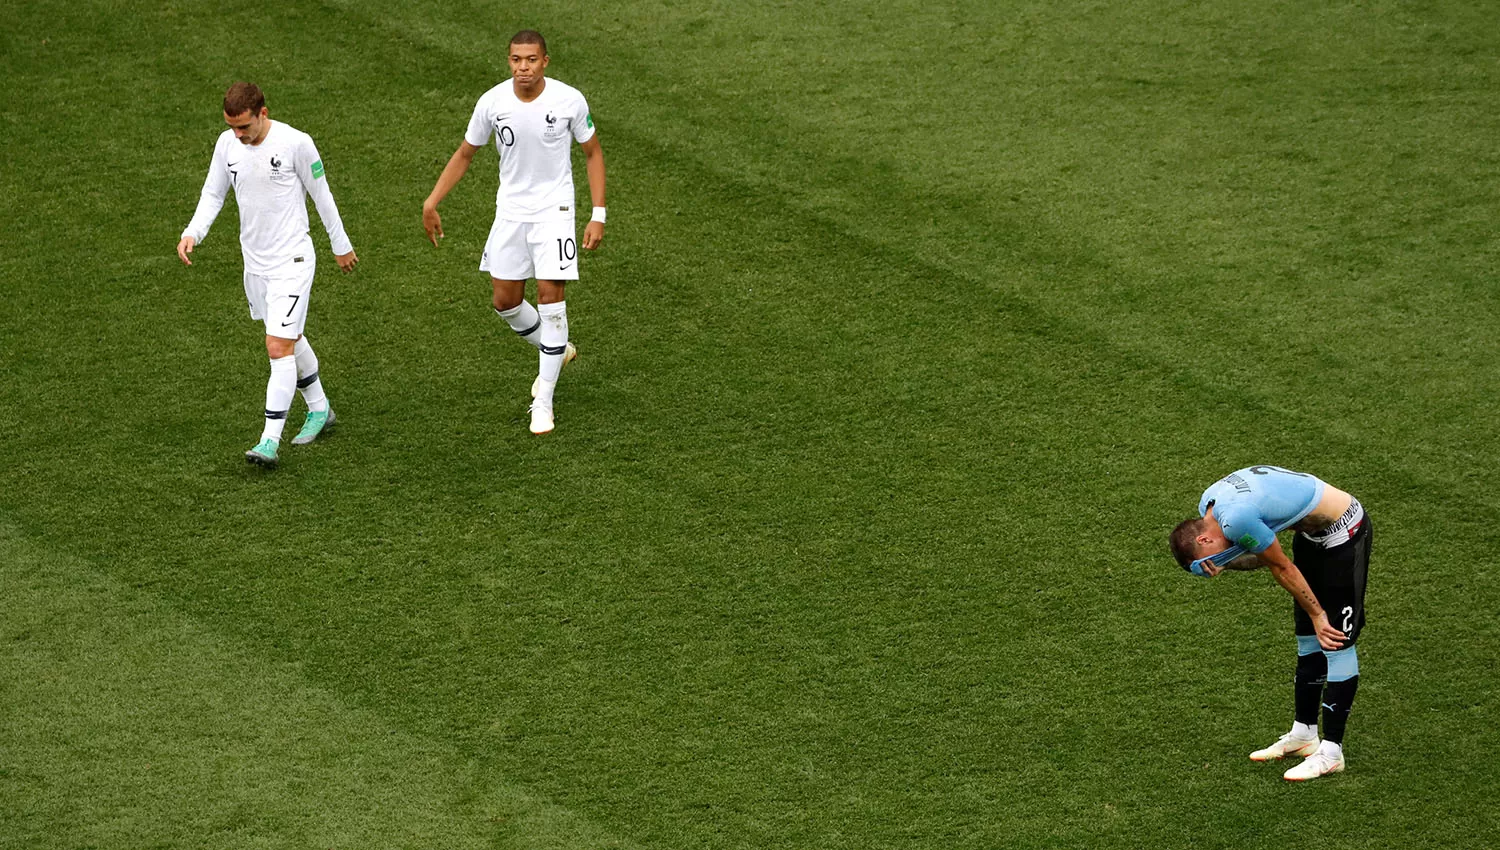 Kylian Mbappé es una de las sensaciones del Mundial. En la foto, junto a Griezmann, tras la victoria sobre Uruguay.
REUTERS